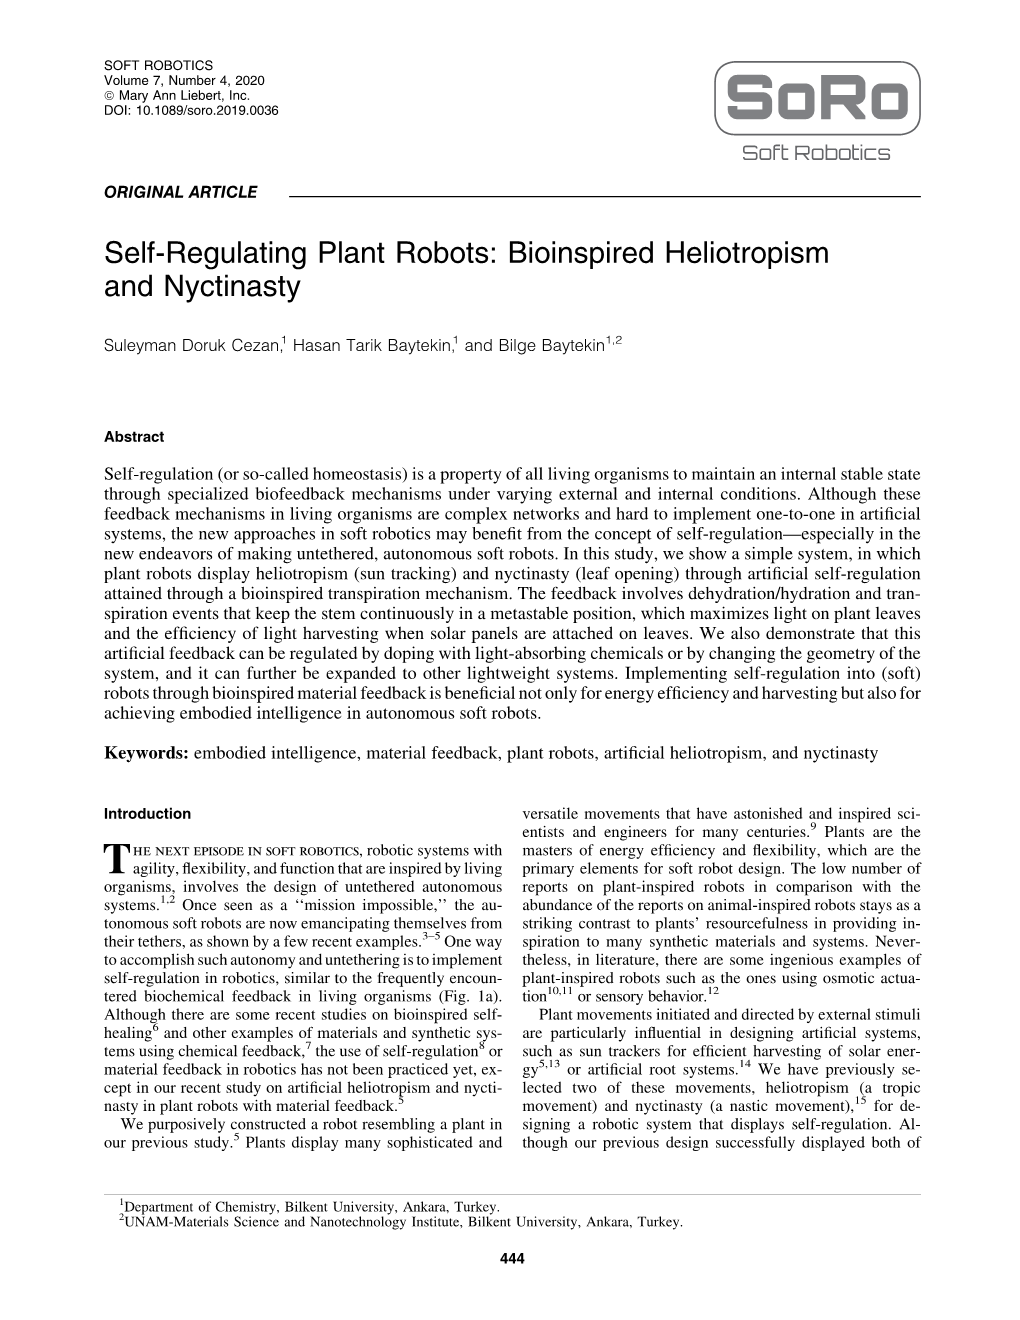 Self-Regulating Plant Robots: Bioinspired Heliotropism and Nyctinasty